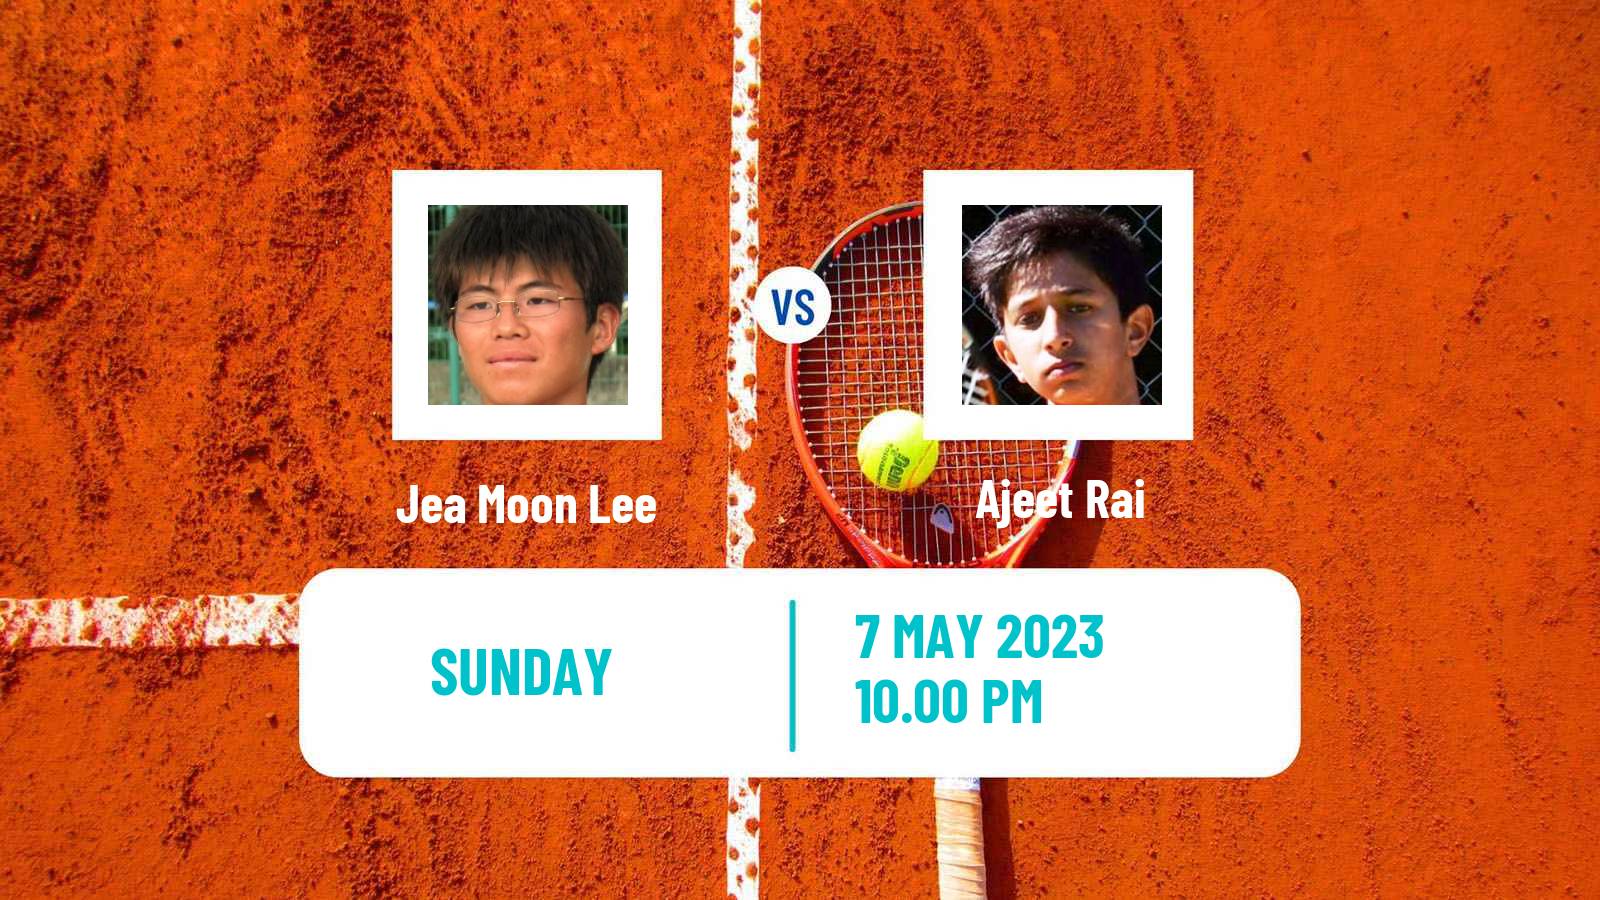 Tennis ATP Challenger Jea Moon Lee - Ajeet Rai